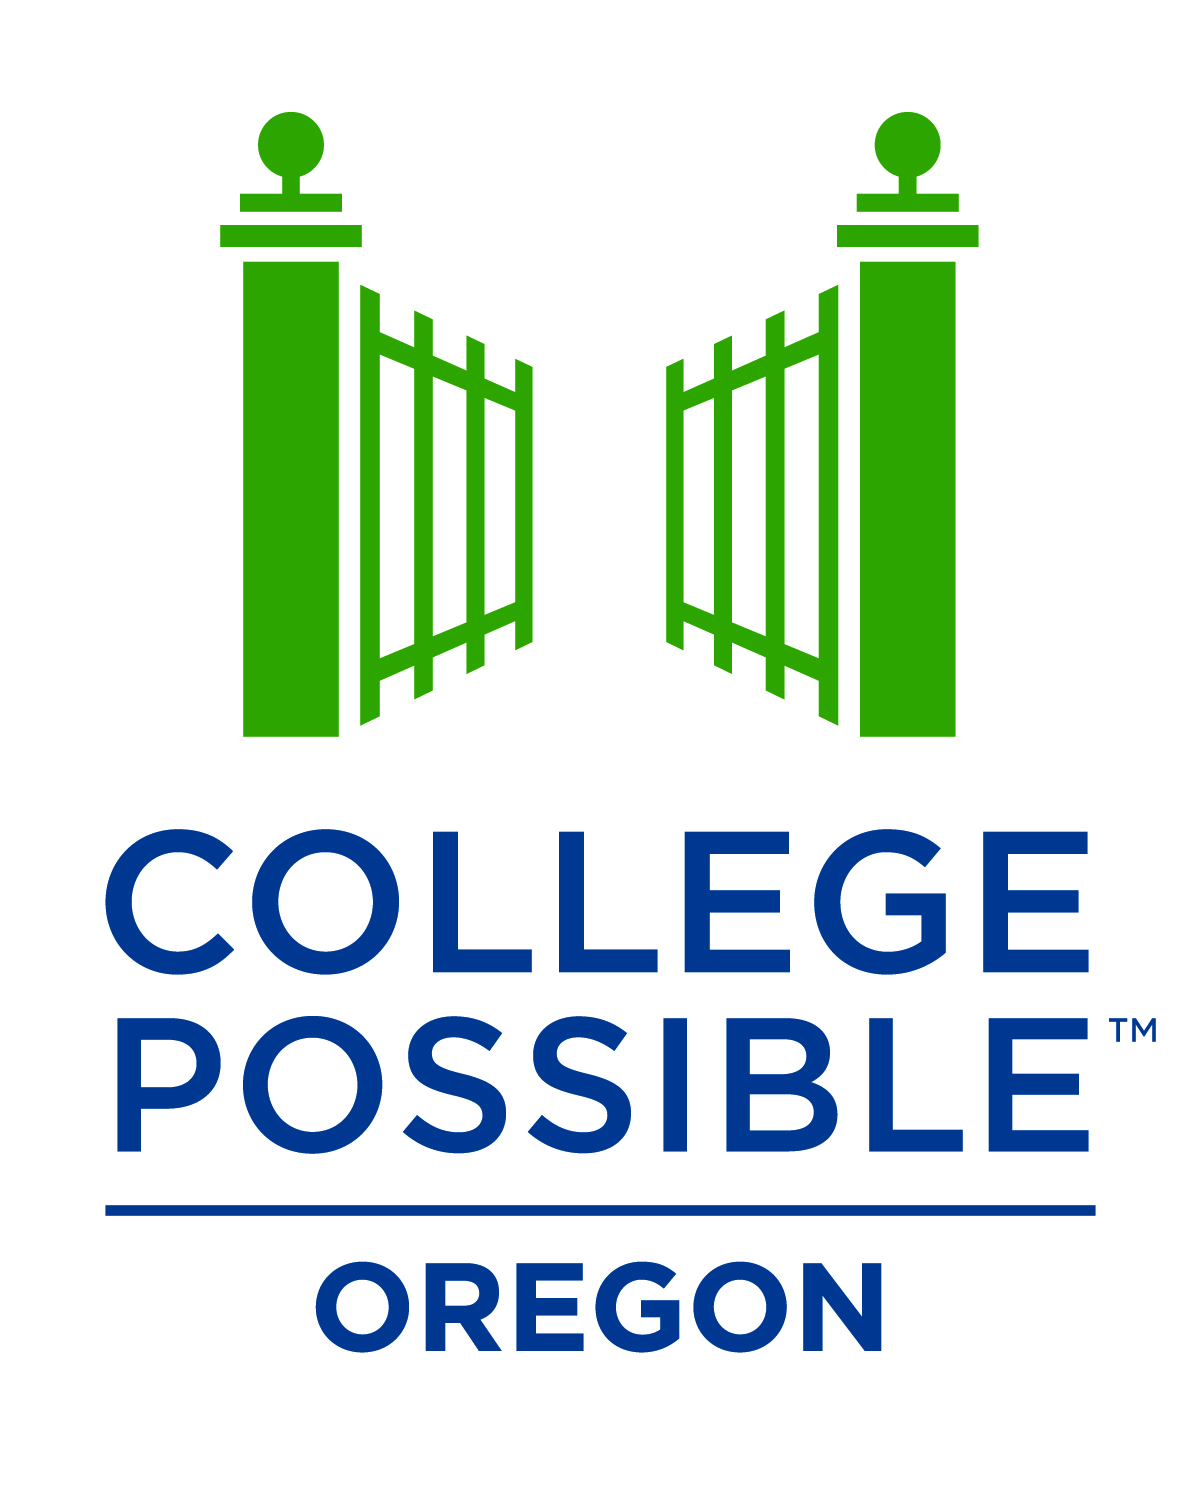 College Possible Oregon logo